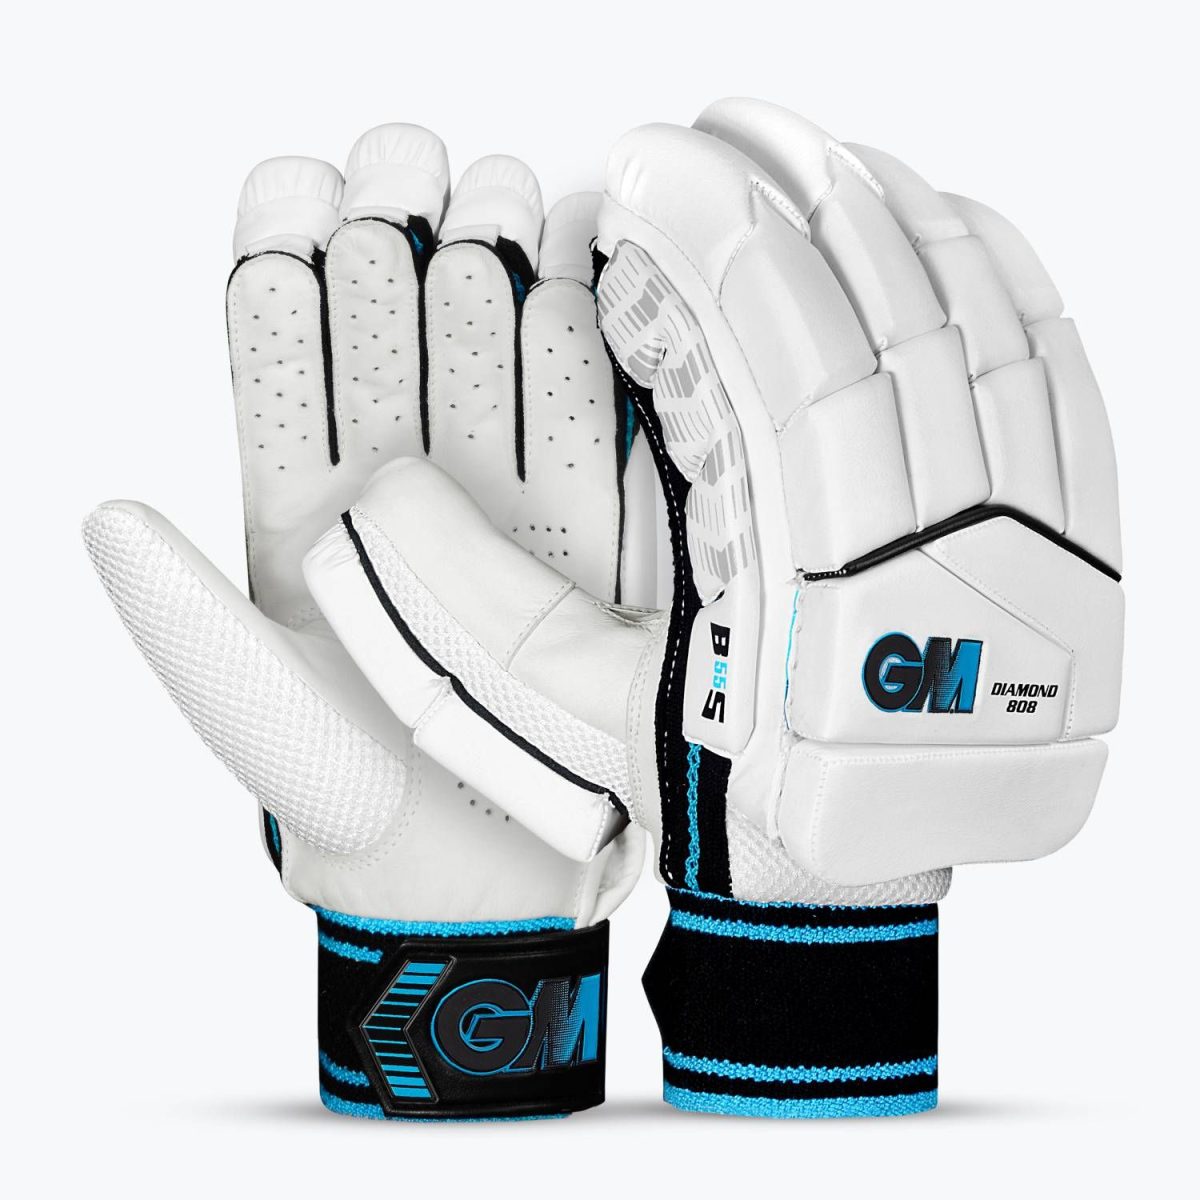 GM Diamond 808 Batting Gloves - MENS